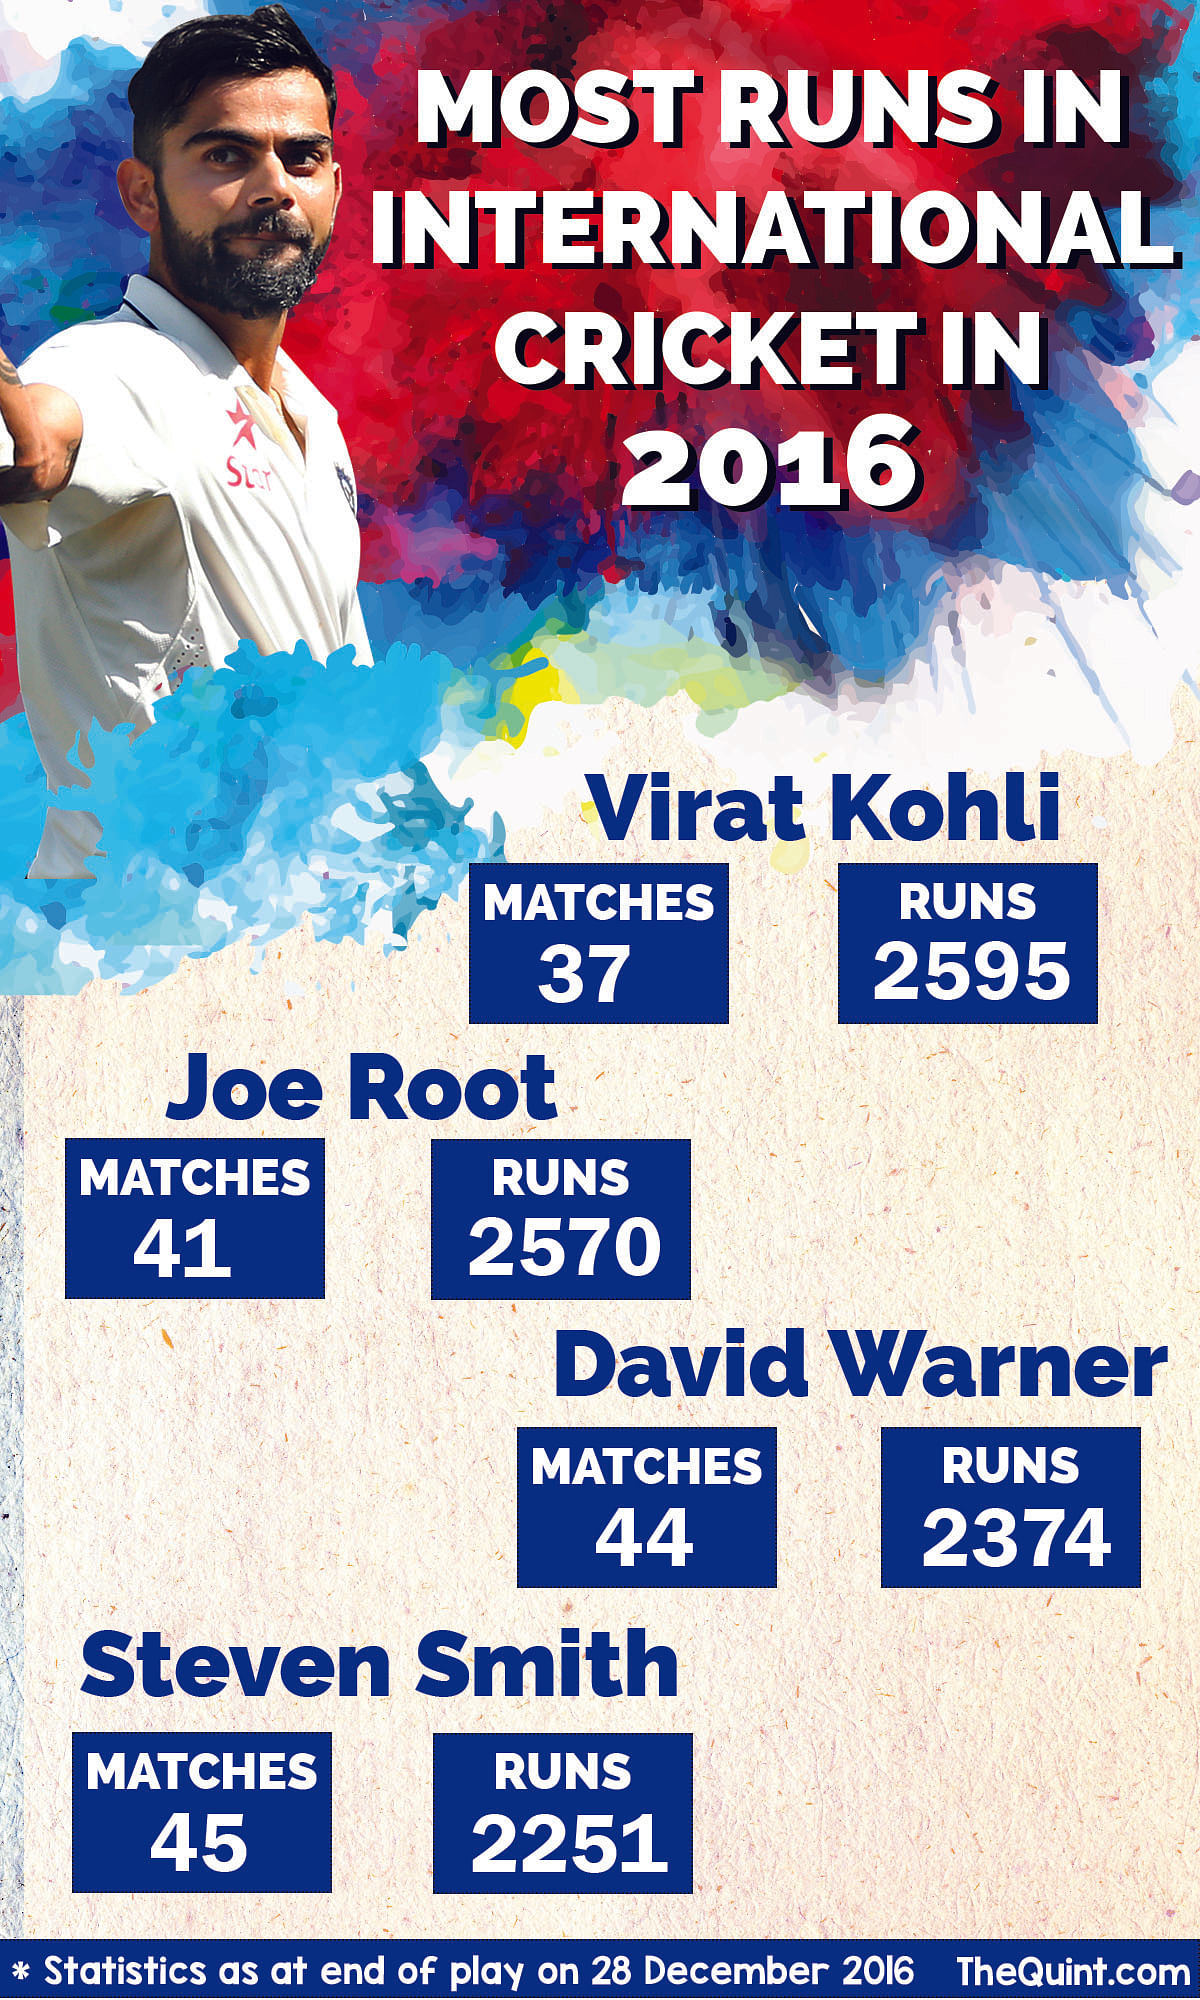 Statistician Arun Gopalakrishnan breaks down Virat Kohli’s 2016 in numbers.